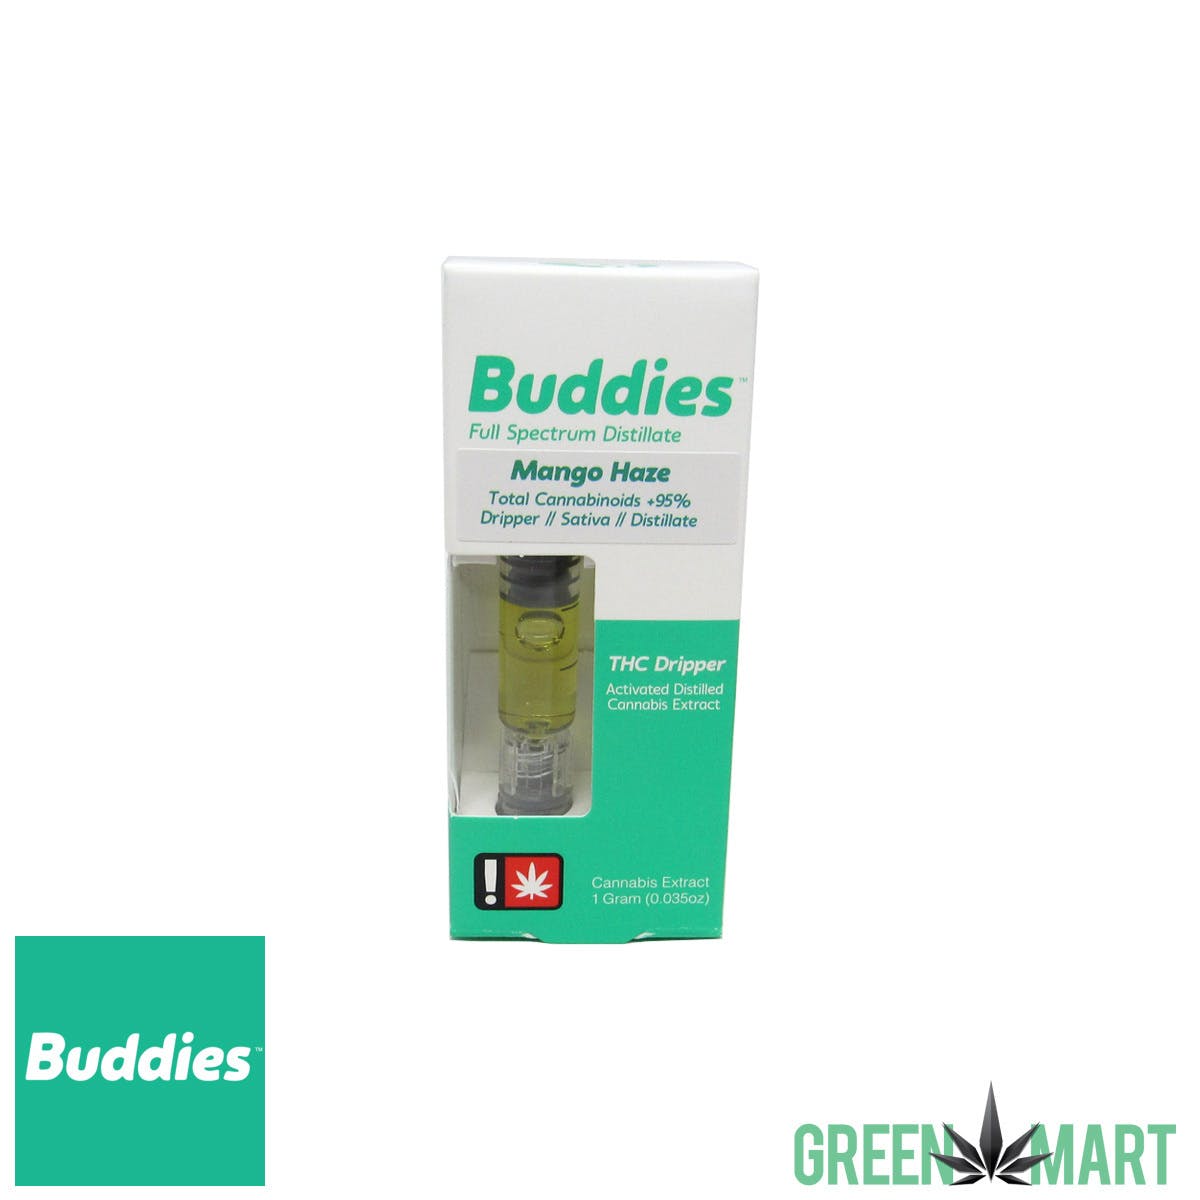 Buddies THC Dripper - Mango Haze